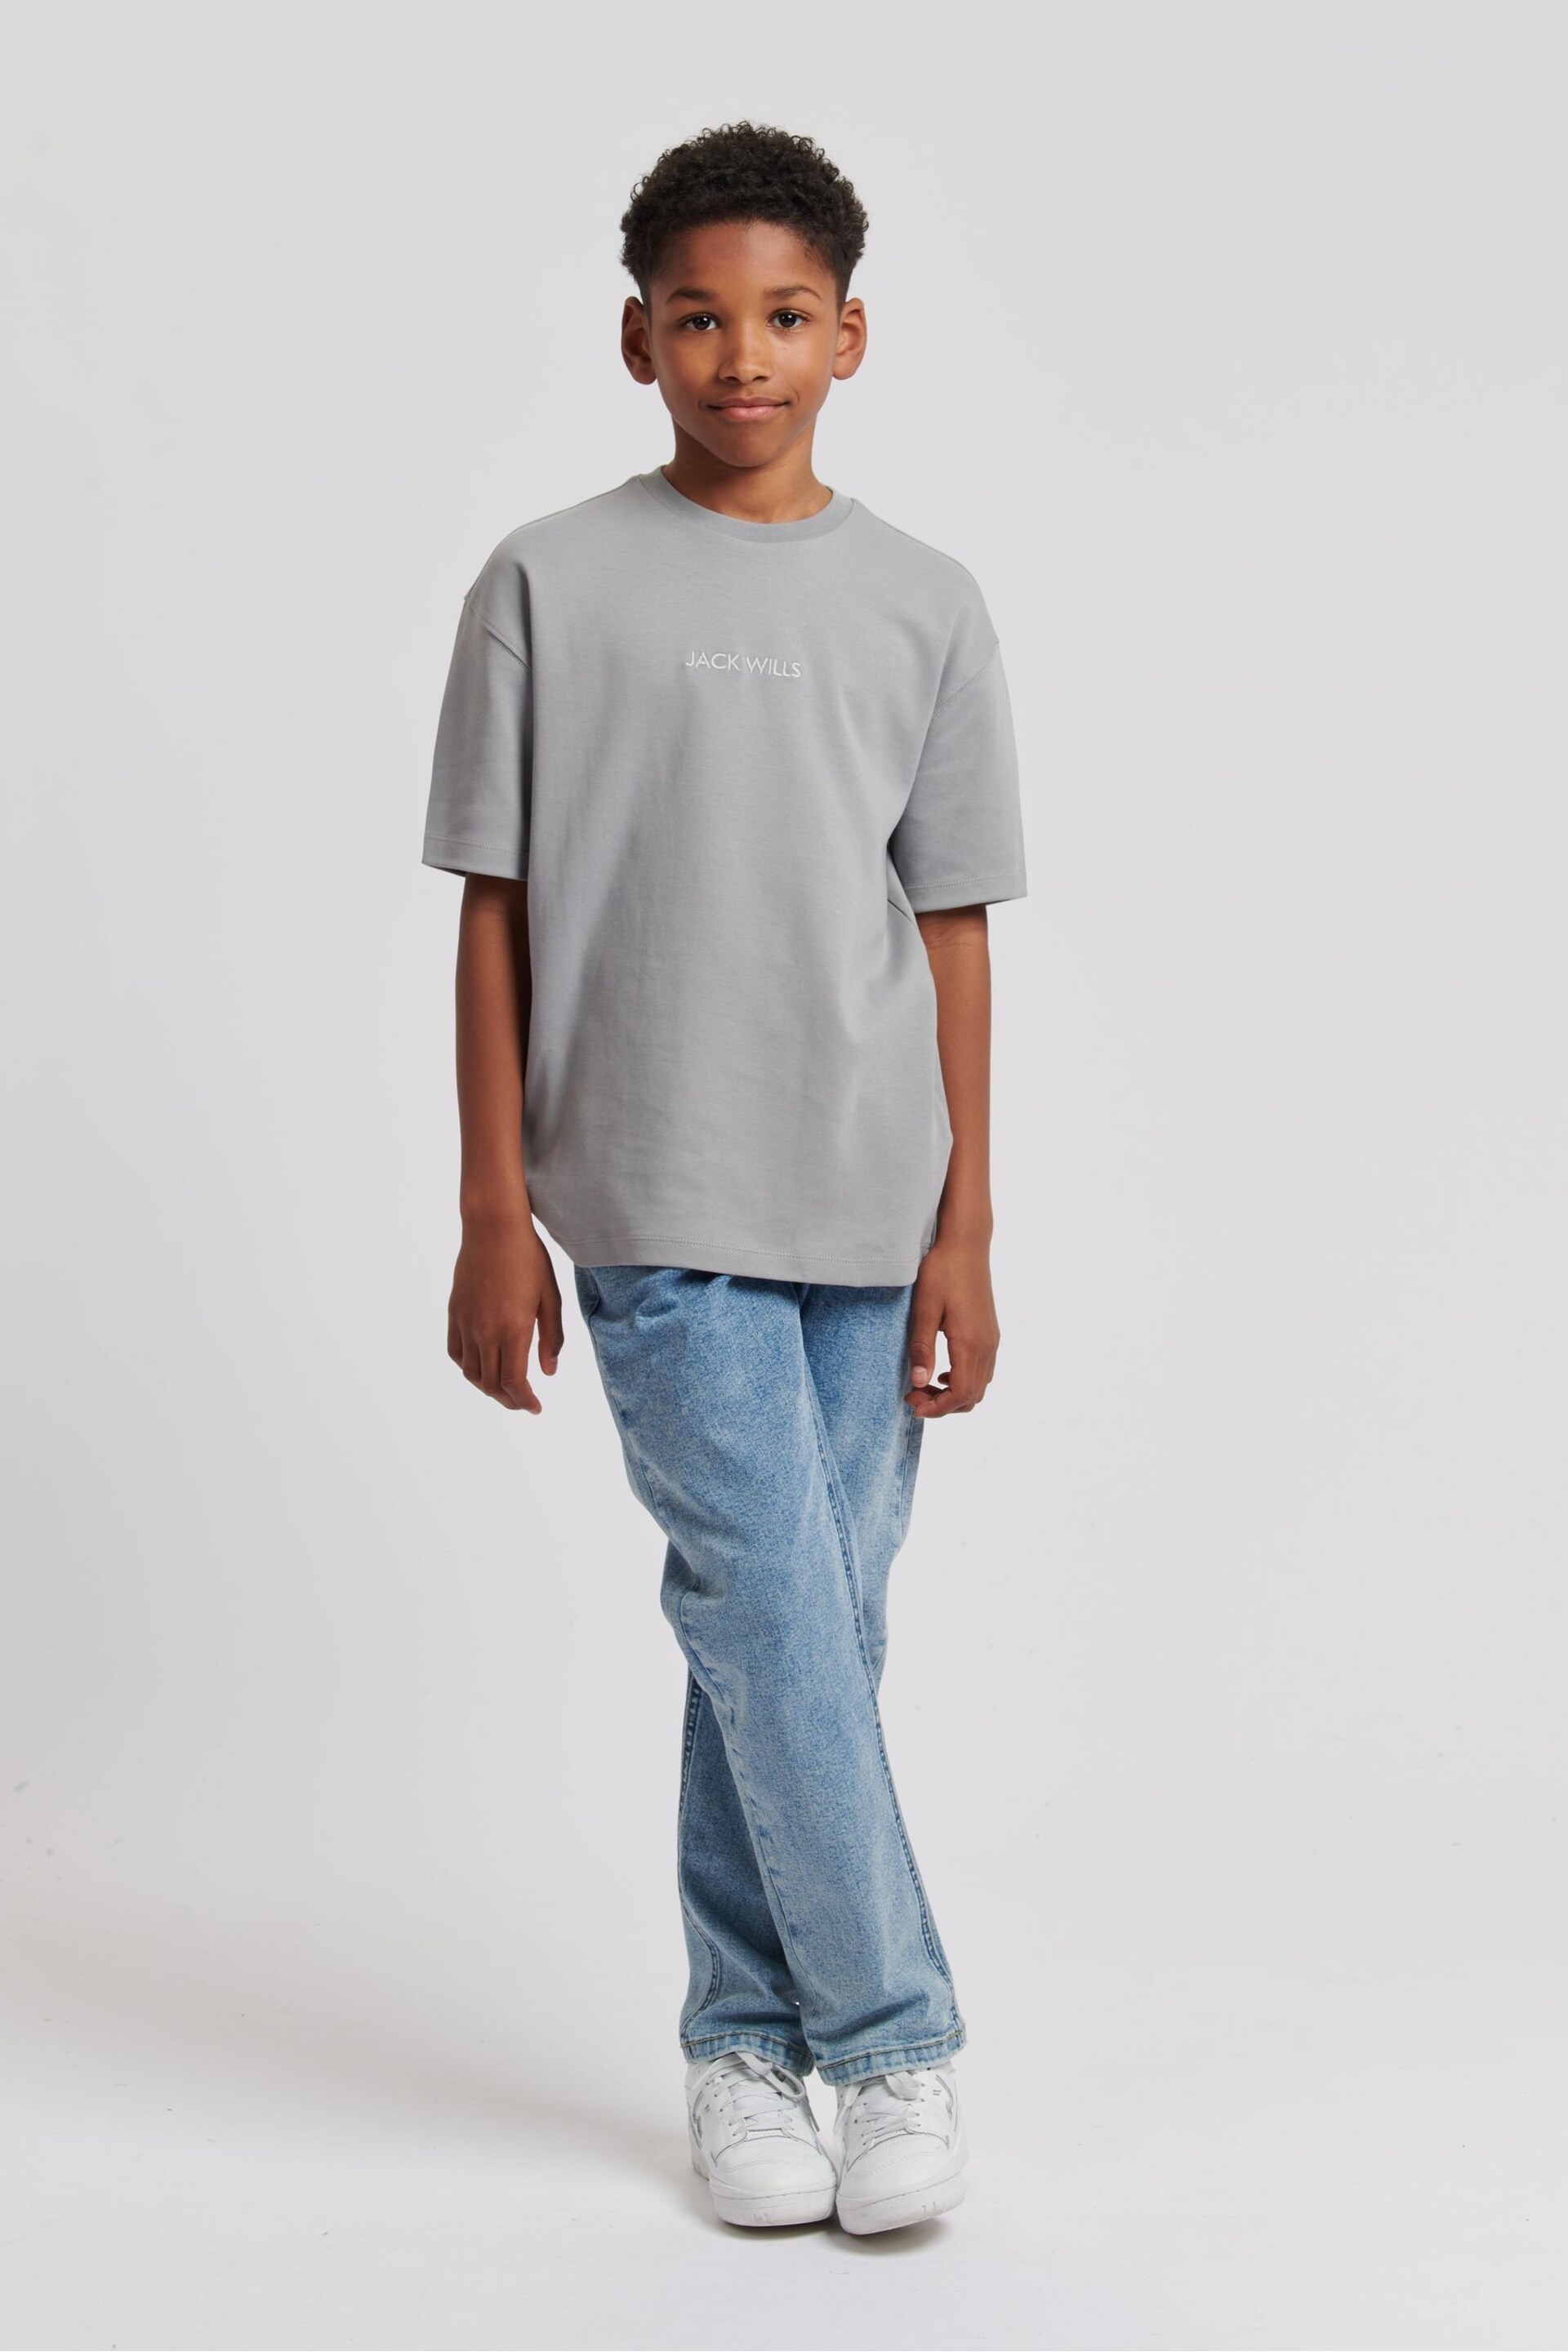 Jack Wills Boys Grey Loose Fit Debdon T-Shirt - Image 2 of 4